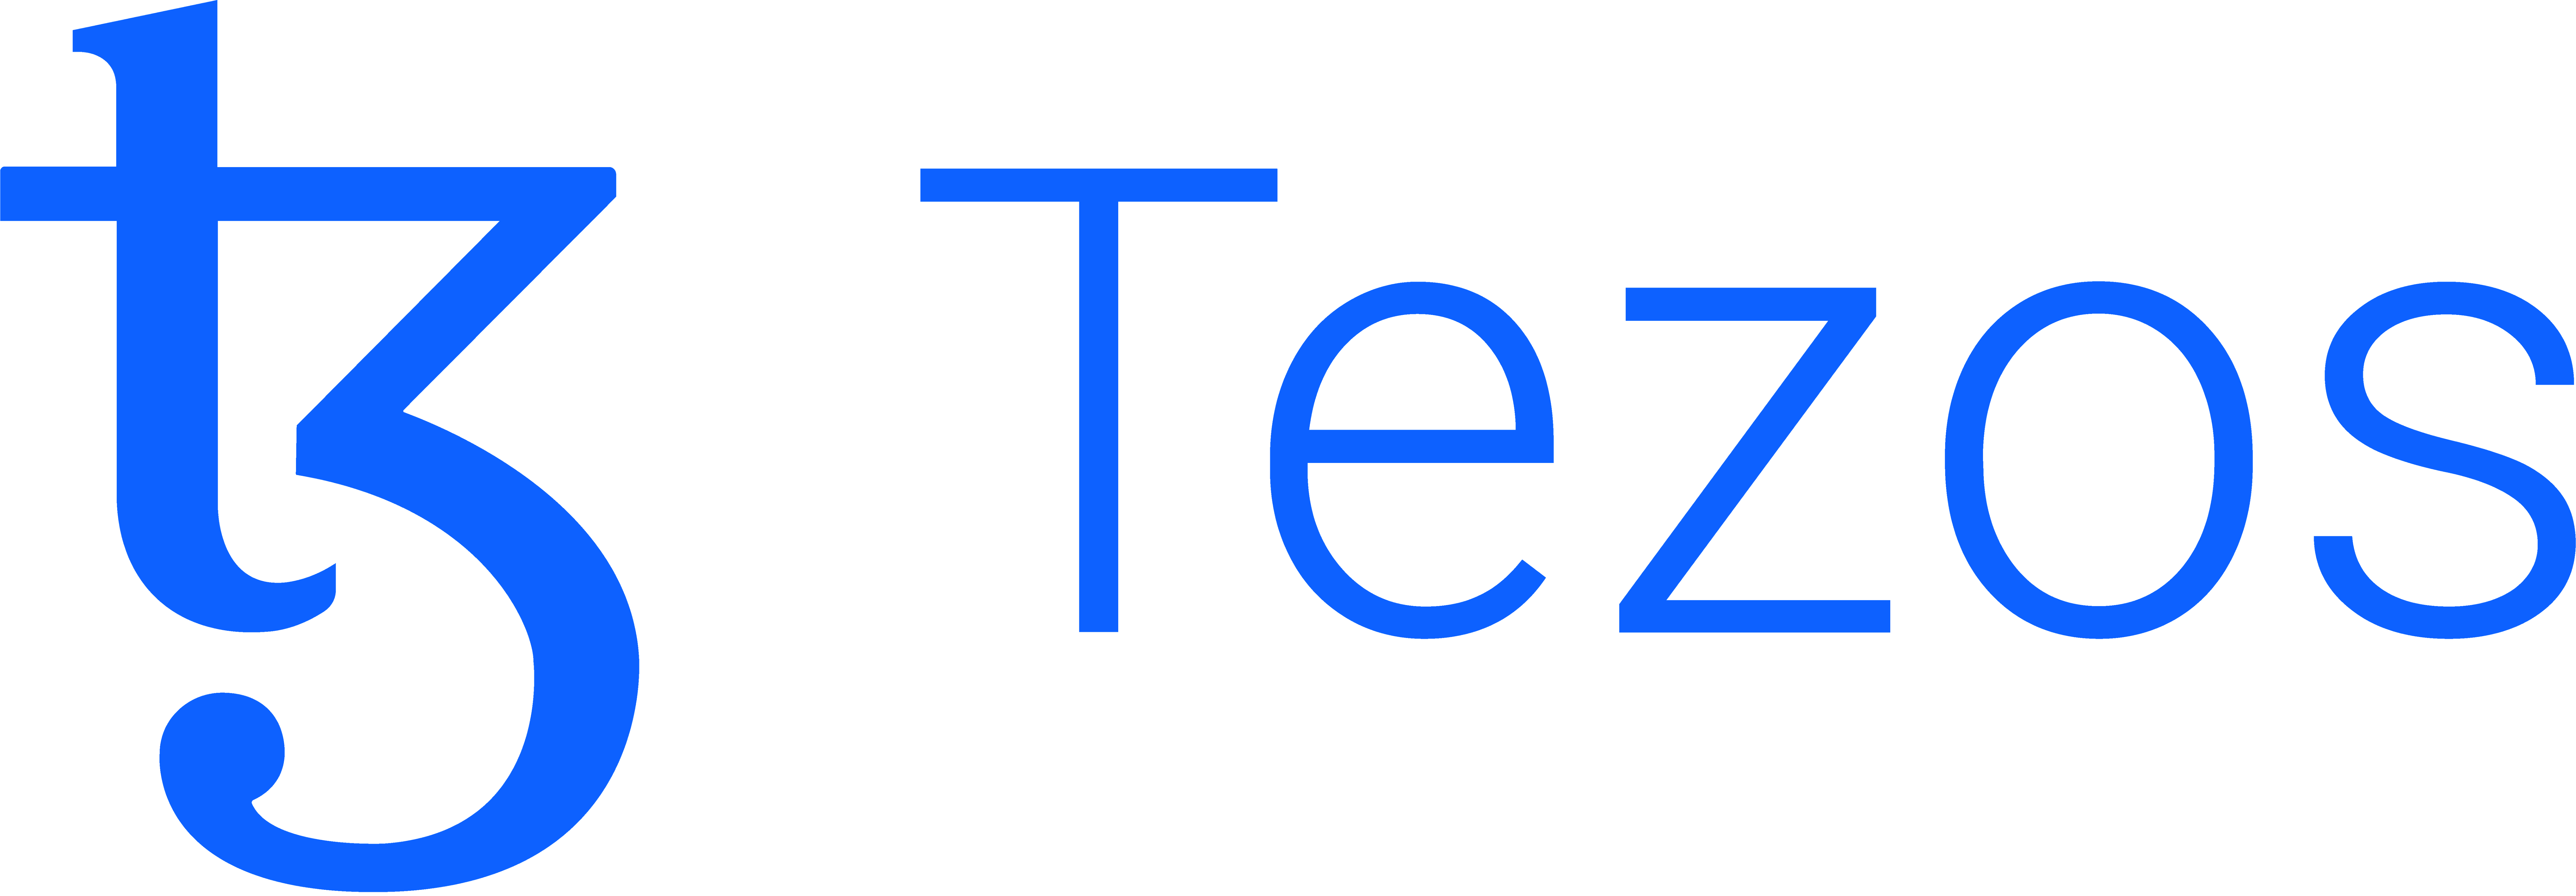 Tezos | Lead investor